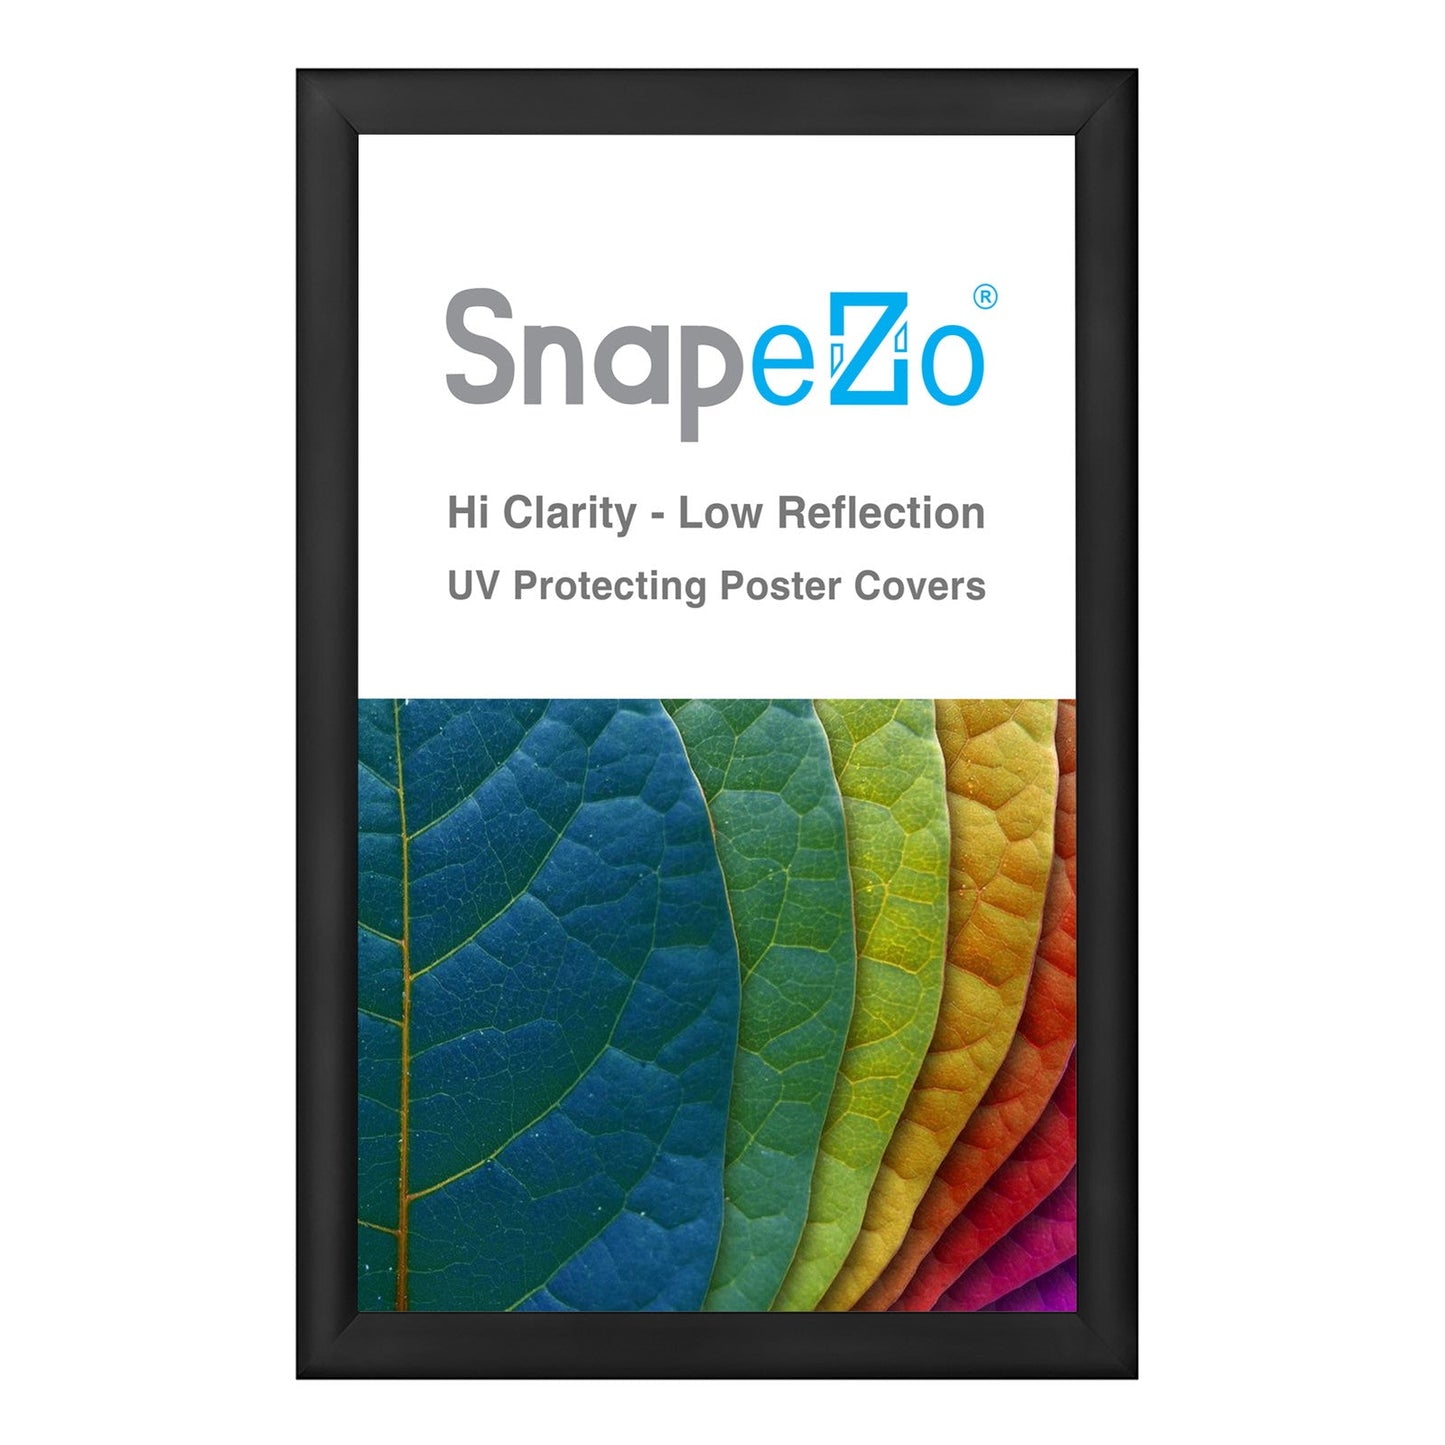 25x40 Black SnapeZo® Snap Frame - 1.2" Profile